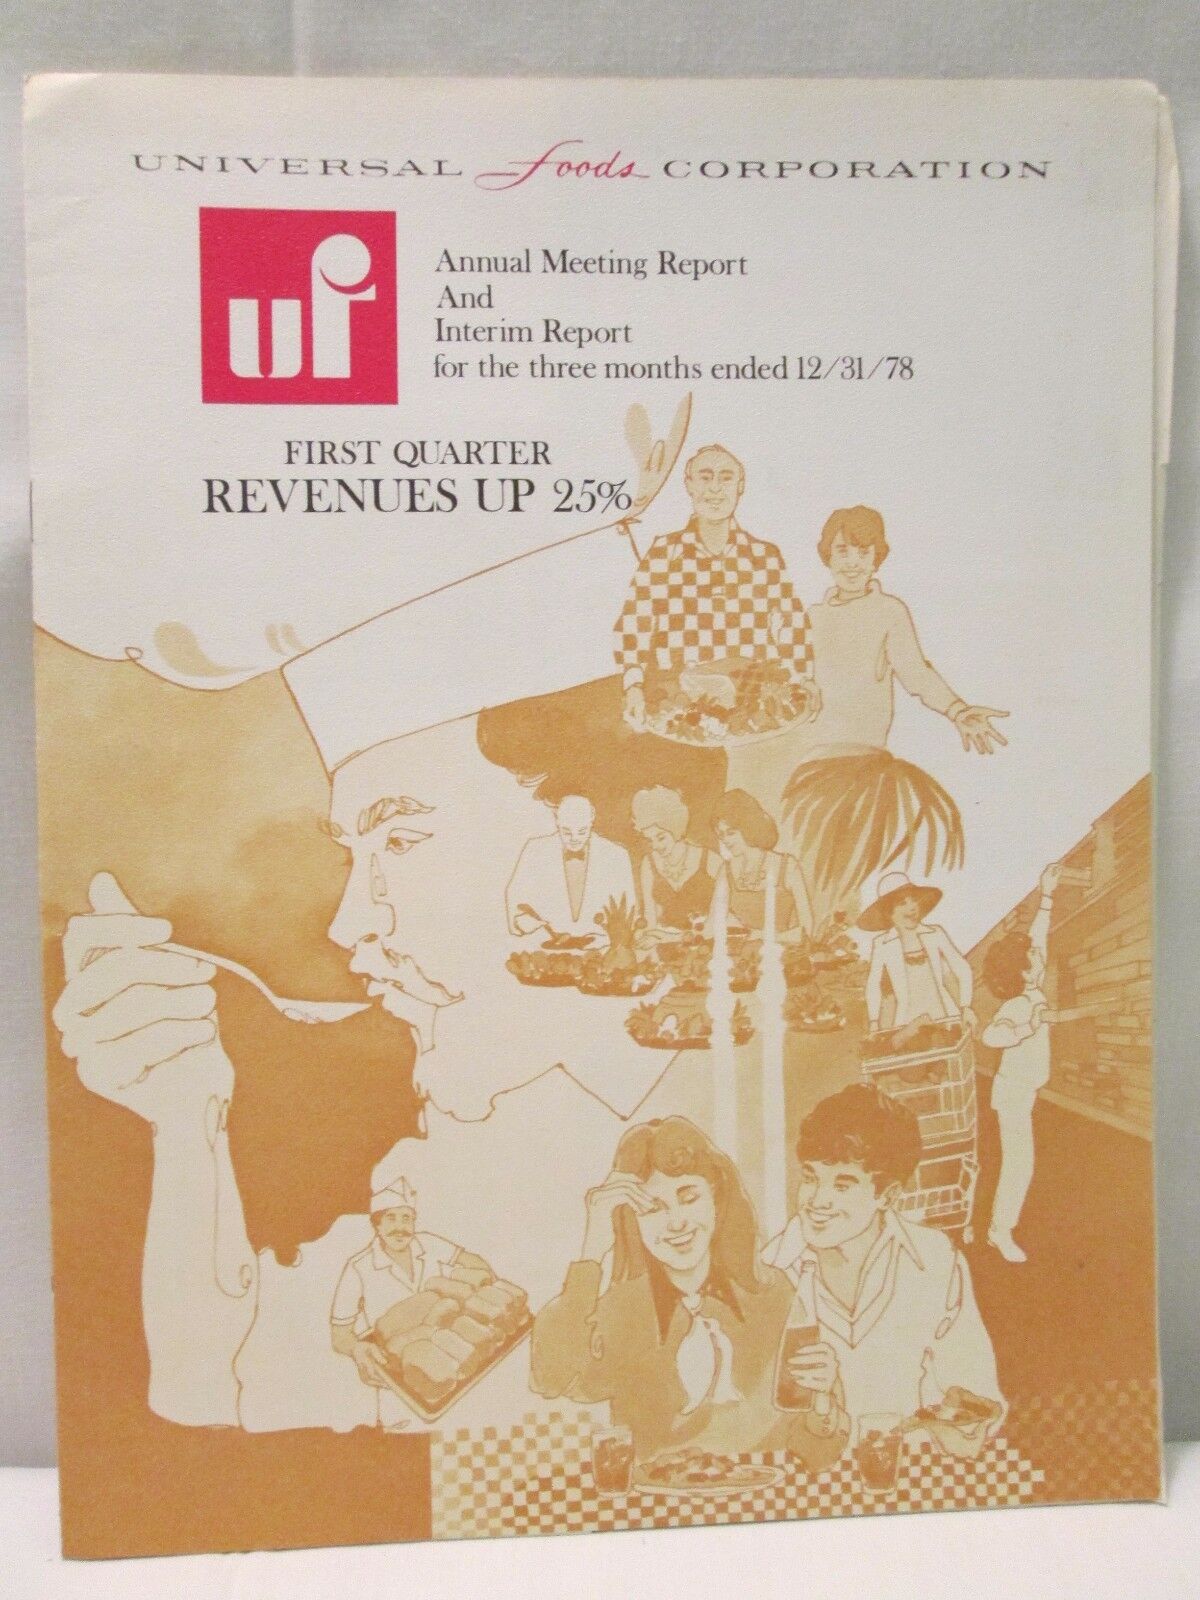 Vtg Universal Foods Corporation Annual Meeting Report Interim 1st Quarter 1978